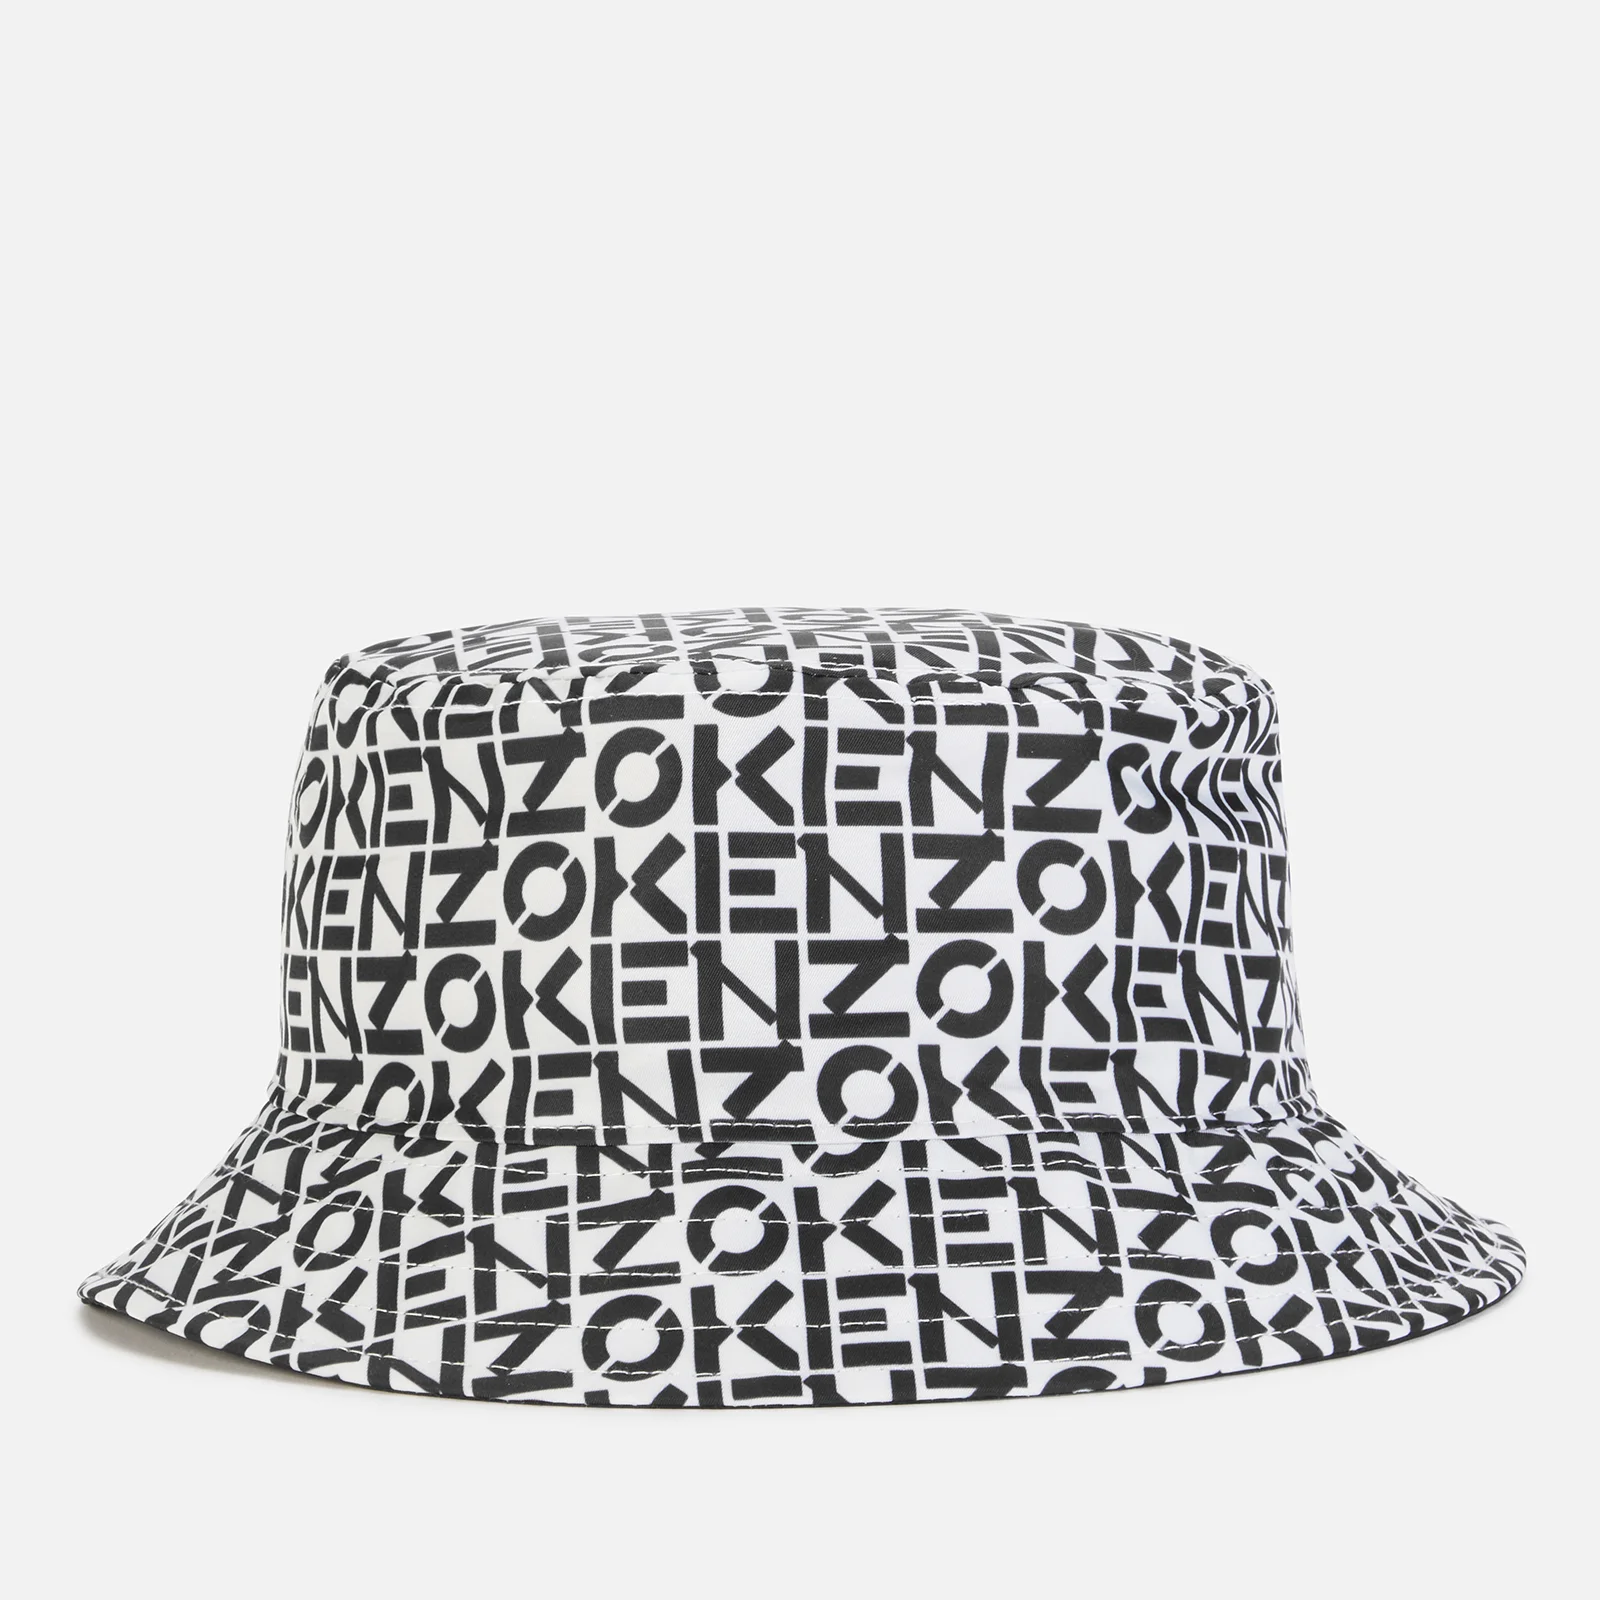 KENZO Men's Monogram Reversible Bucket Hat - Off White Image 1